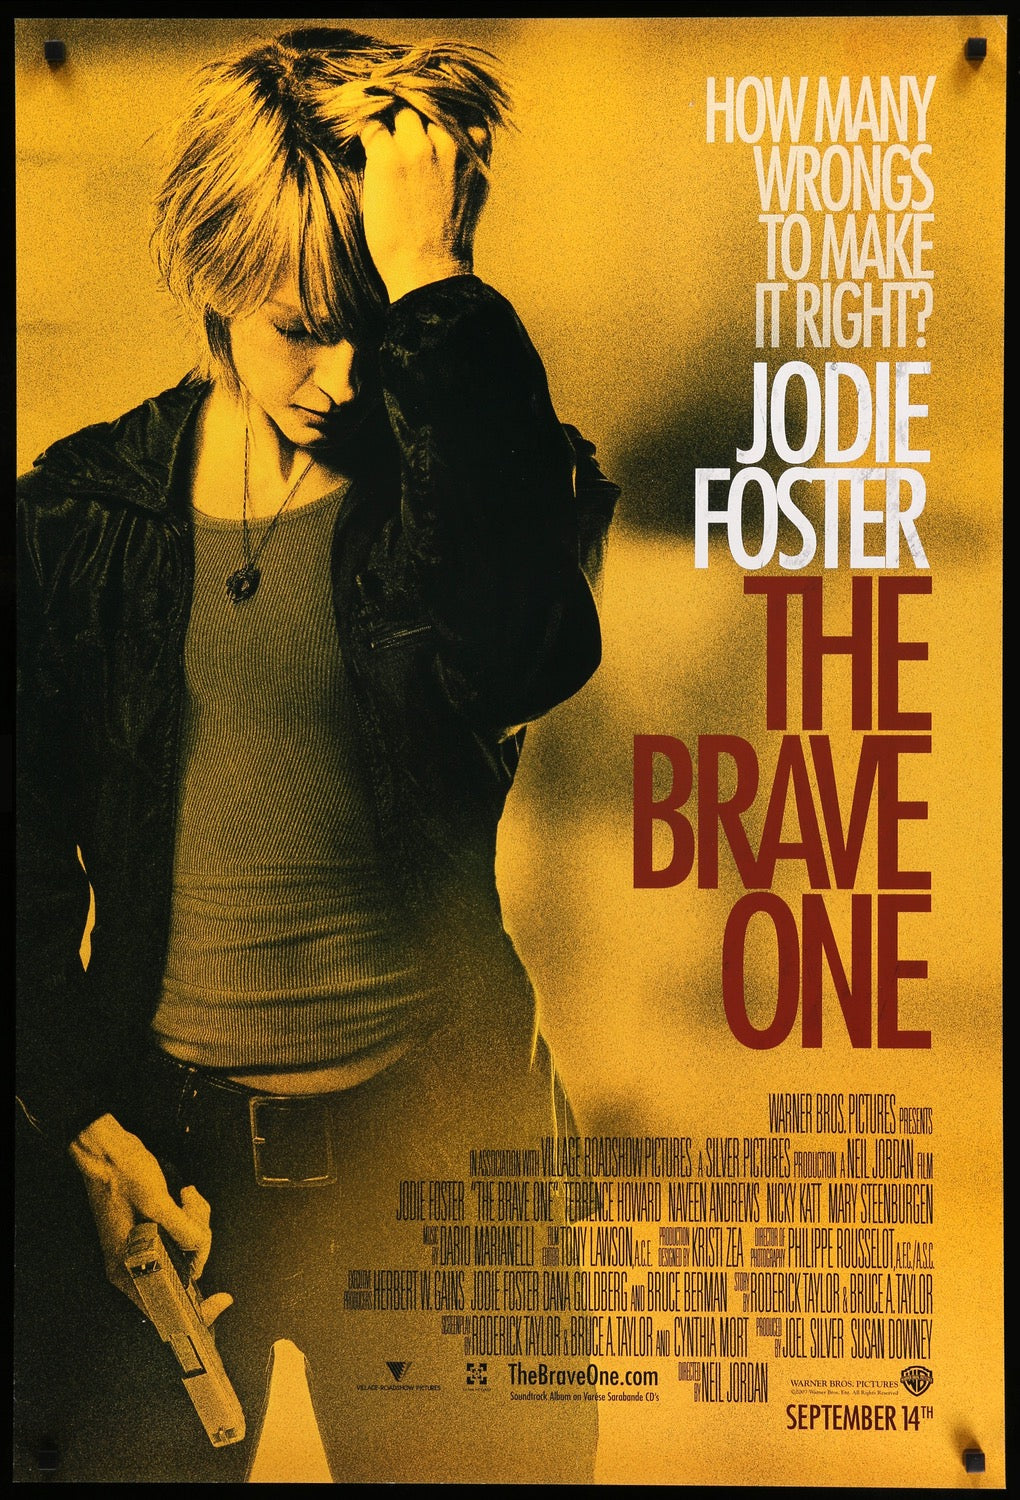 Brave One (2007) original movie poster for sale at Original Film Art